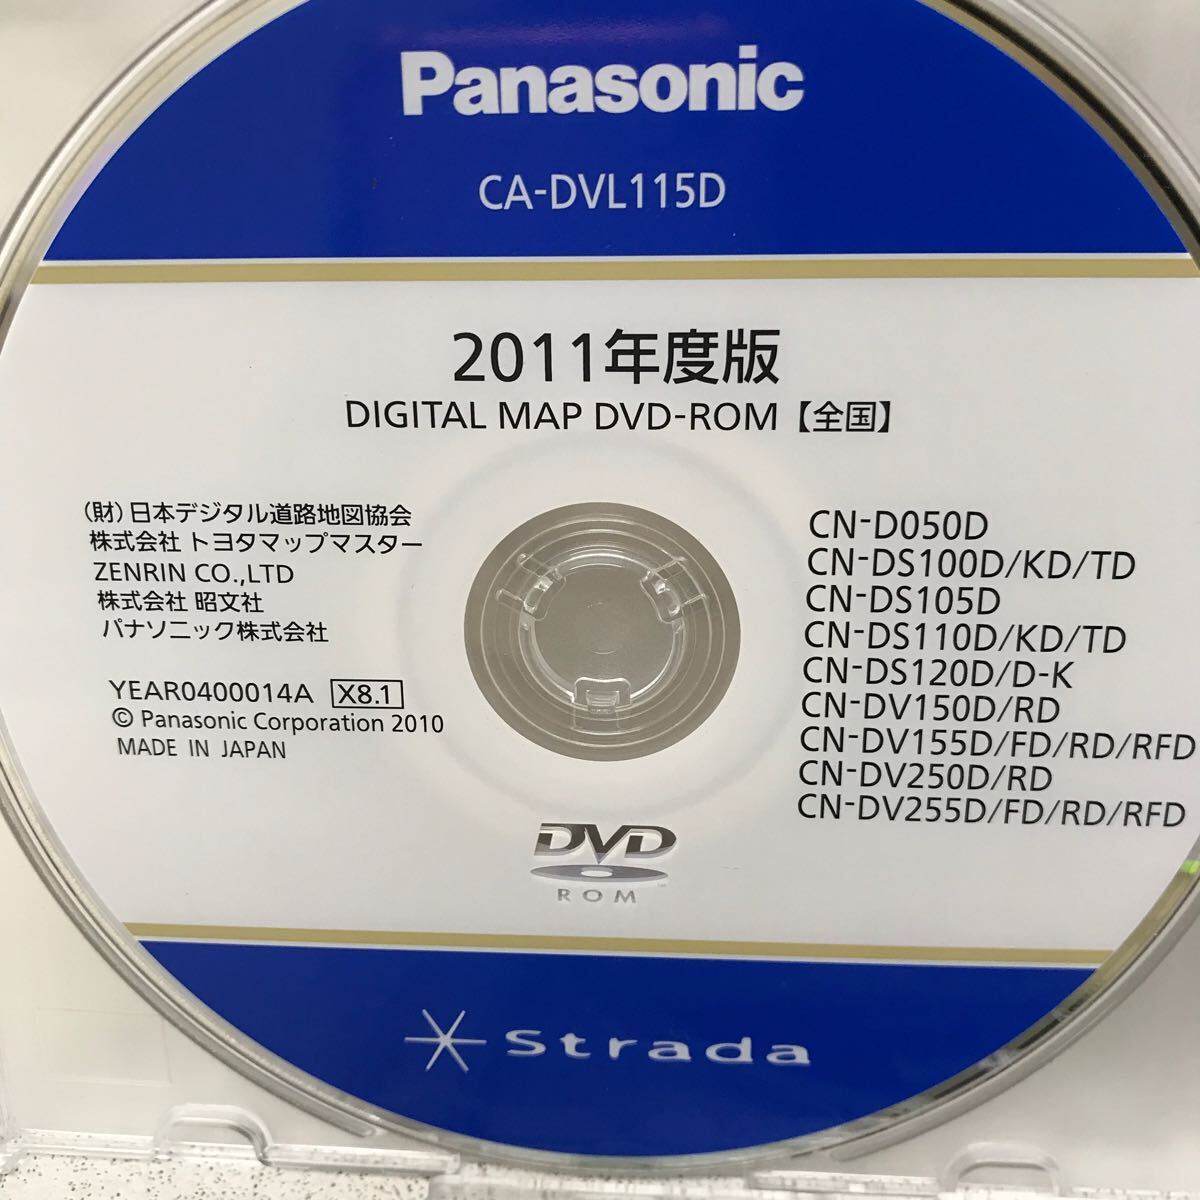 I0320I3 まとめ★Panasonic パナソニック DIGITAL MAP DVD-ROM Strada 5巻セット 昭文社 カーナビ ソフトウェア 松下電器の画像2